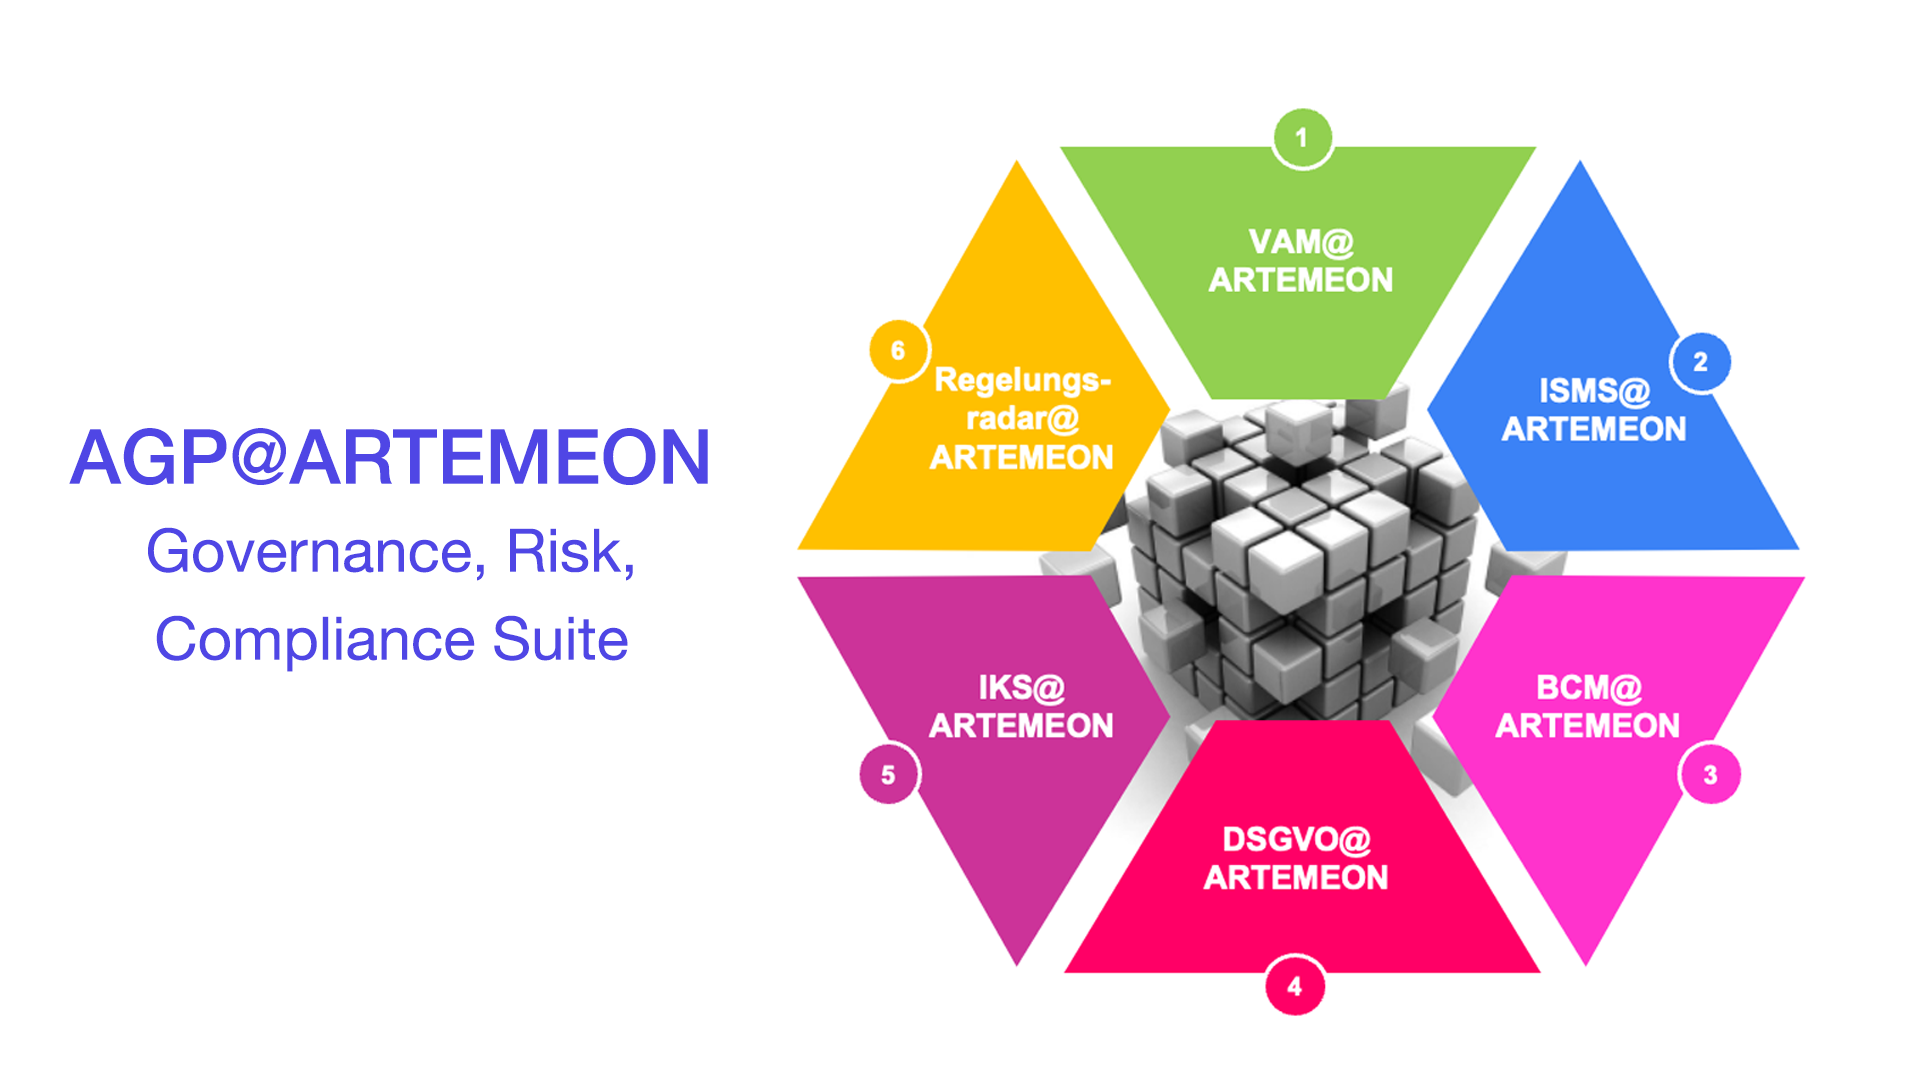 AGP@ARTEMEON Governance, Risk, Compliance Suite